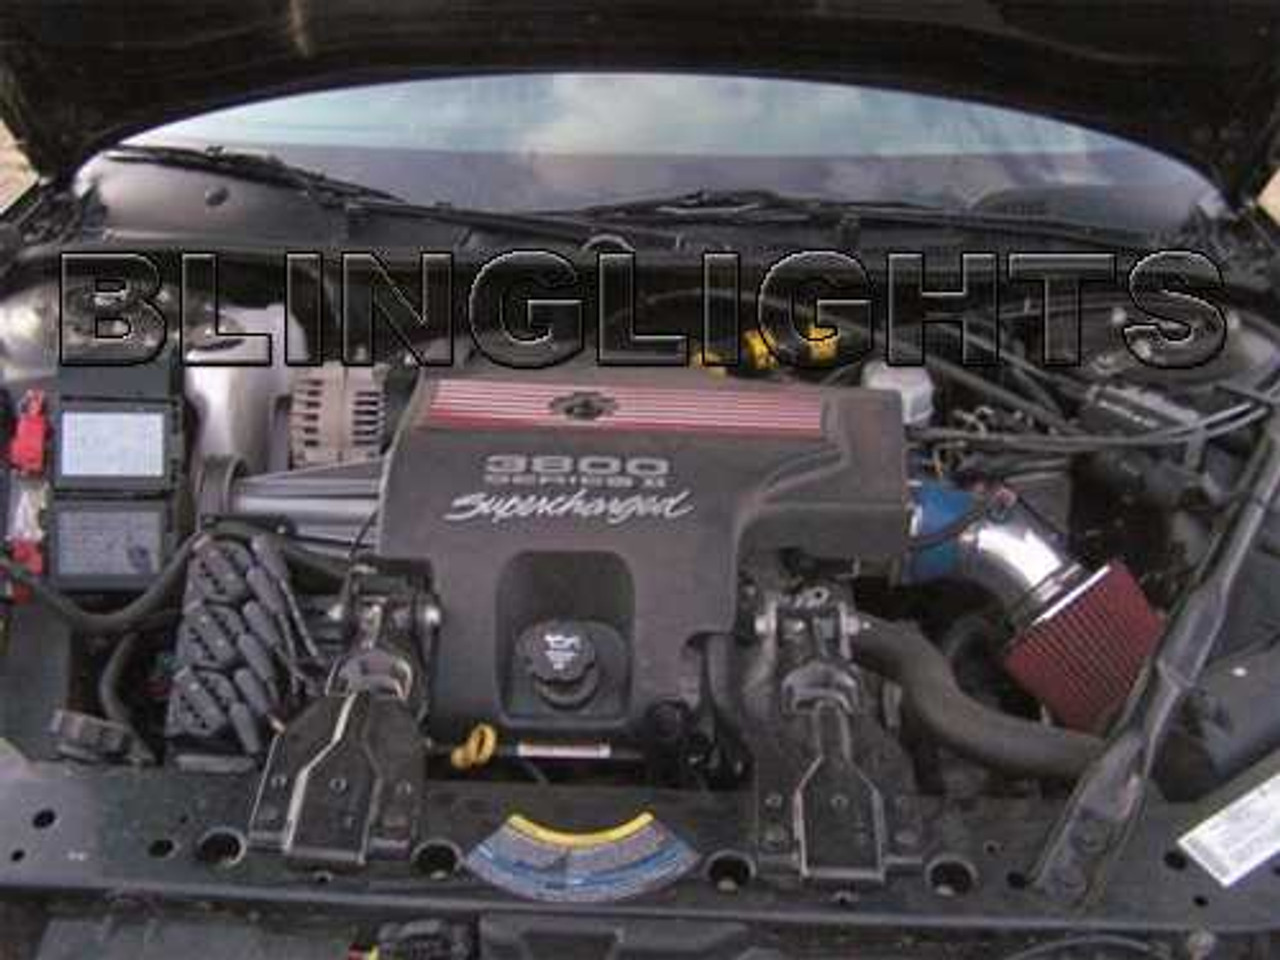 2004 2005 Chevrolet Monte Carlo SS Air Intake Kit L67 3.8L V6 3800 Series II